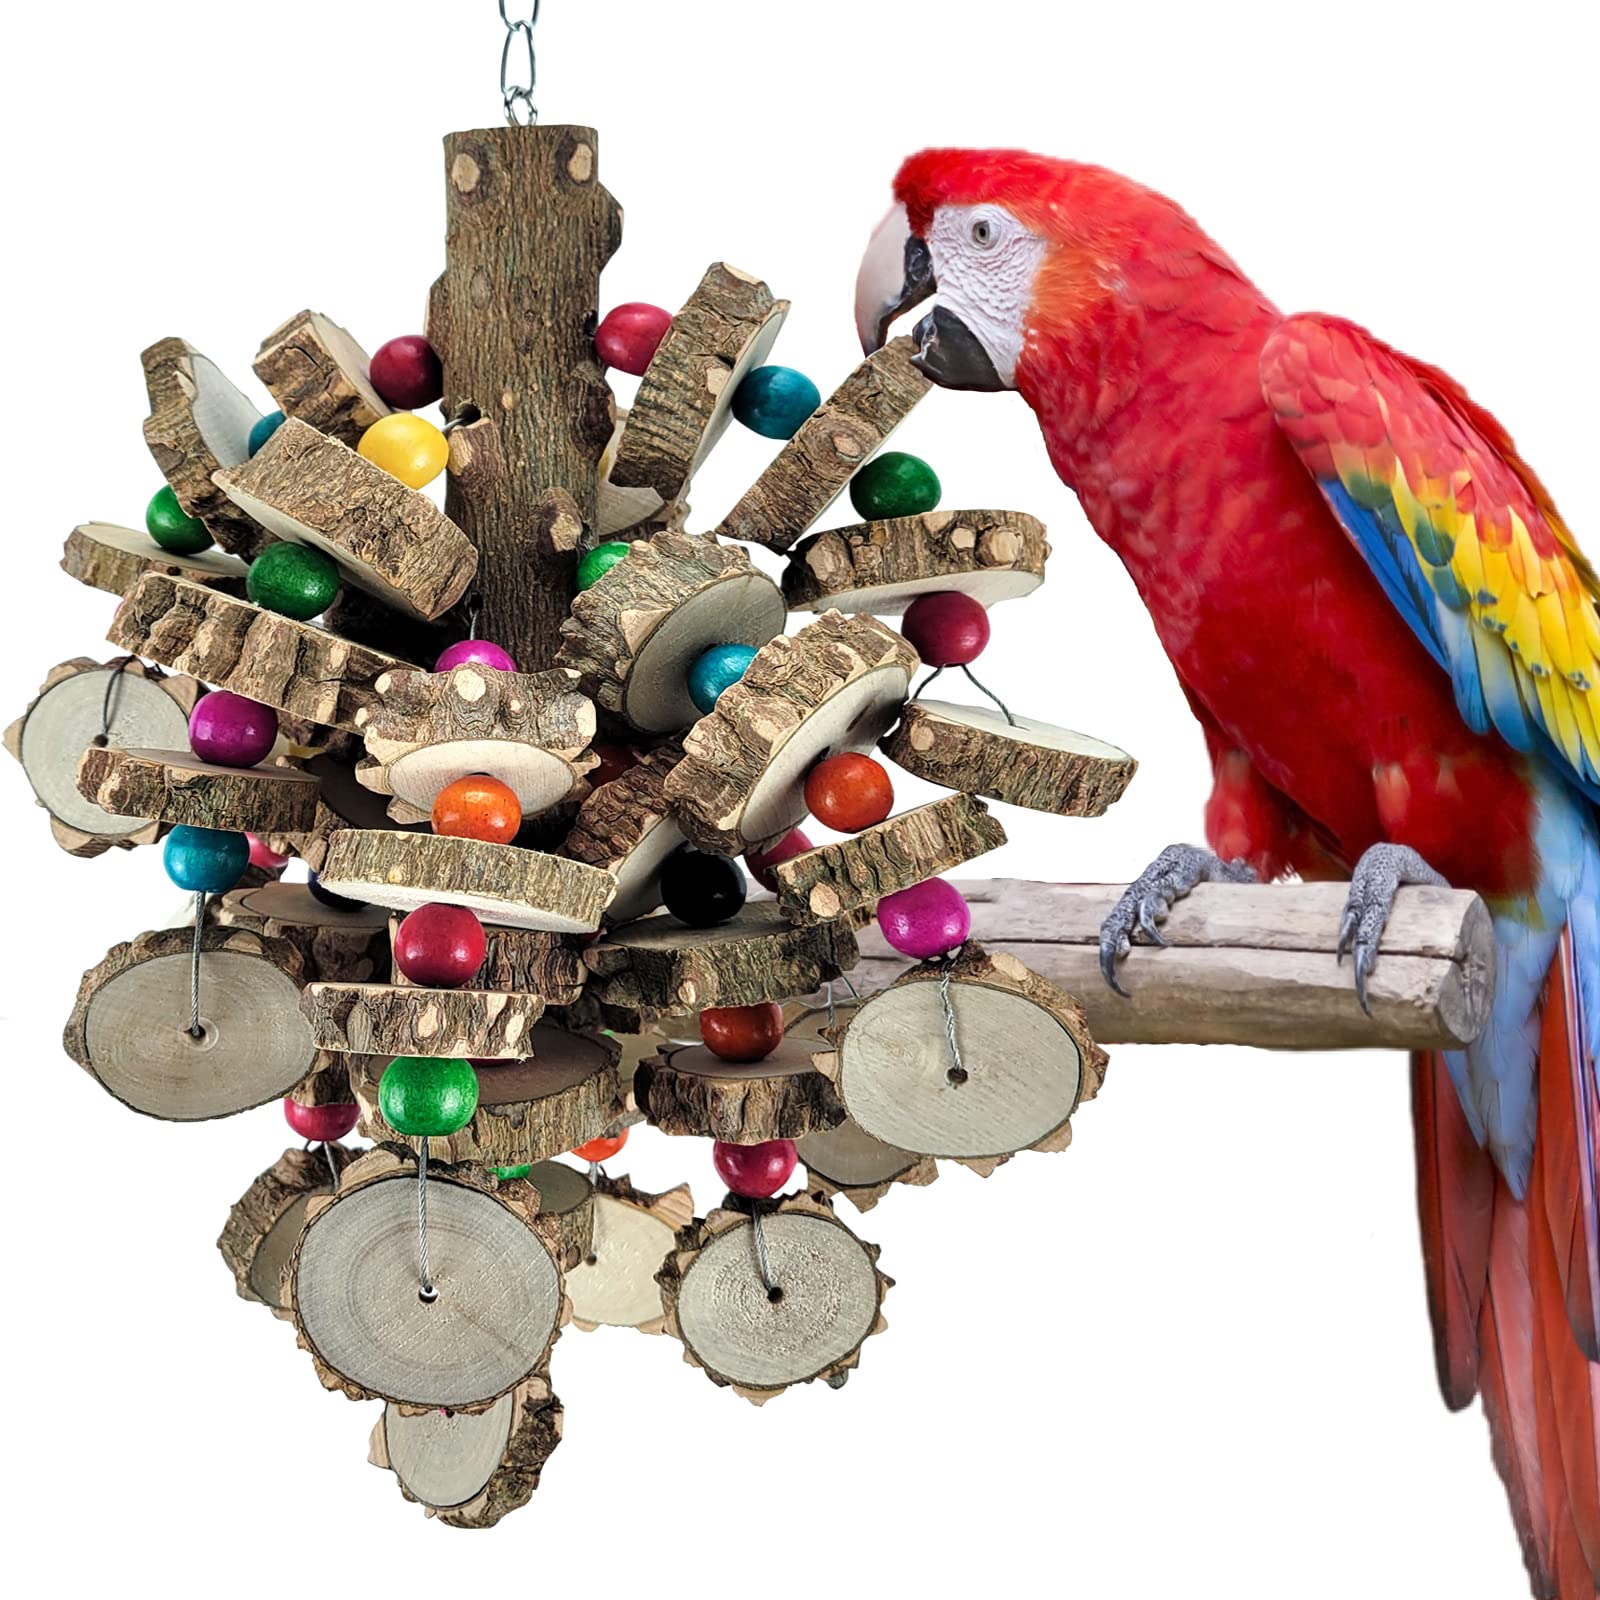 Bird Toys Parrot For Large Birds